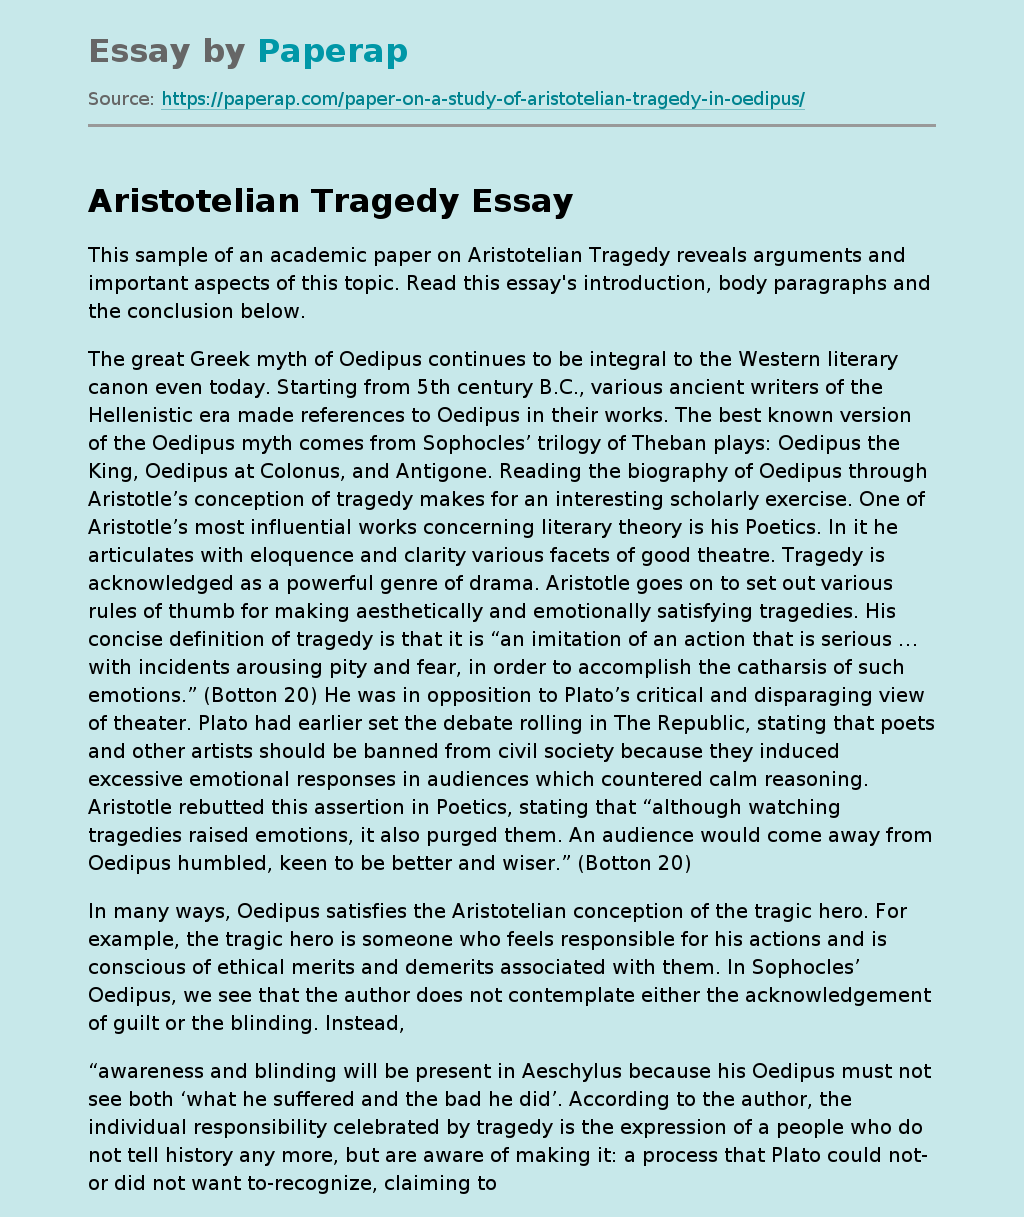 Aristotelian Tragedy